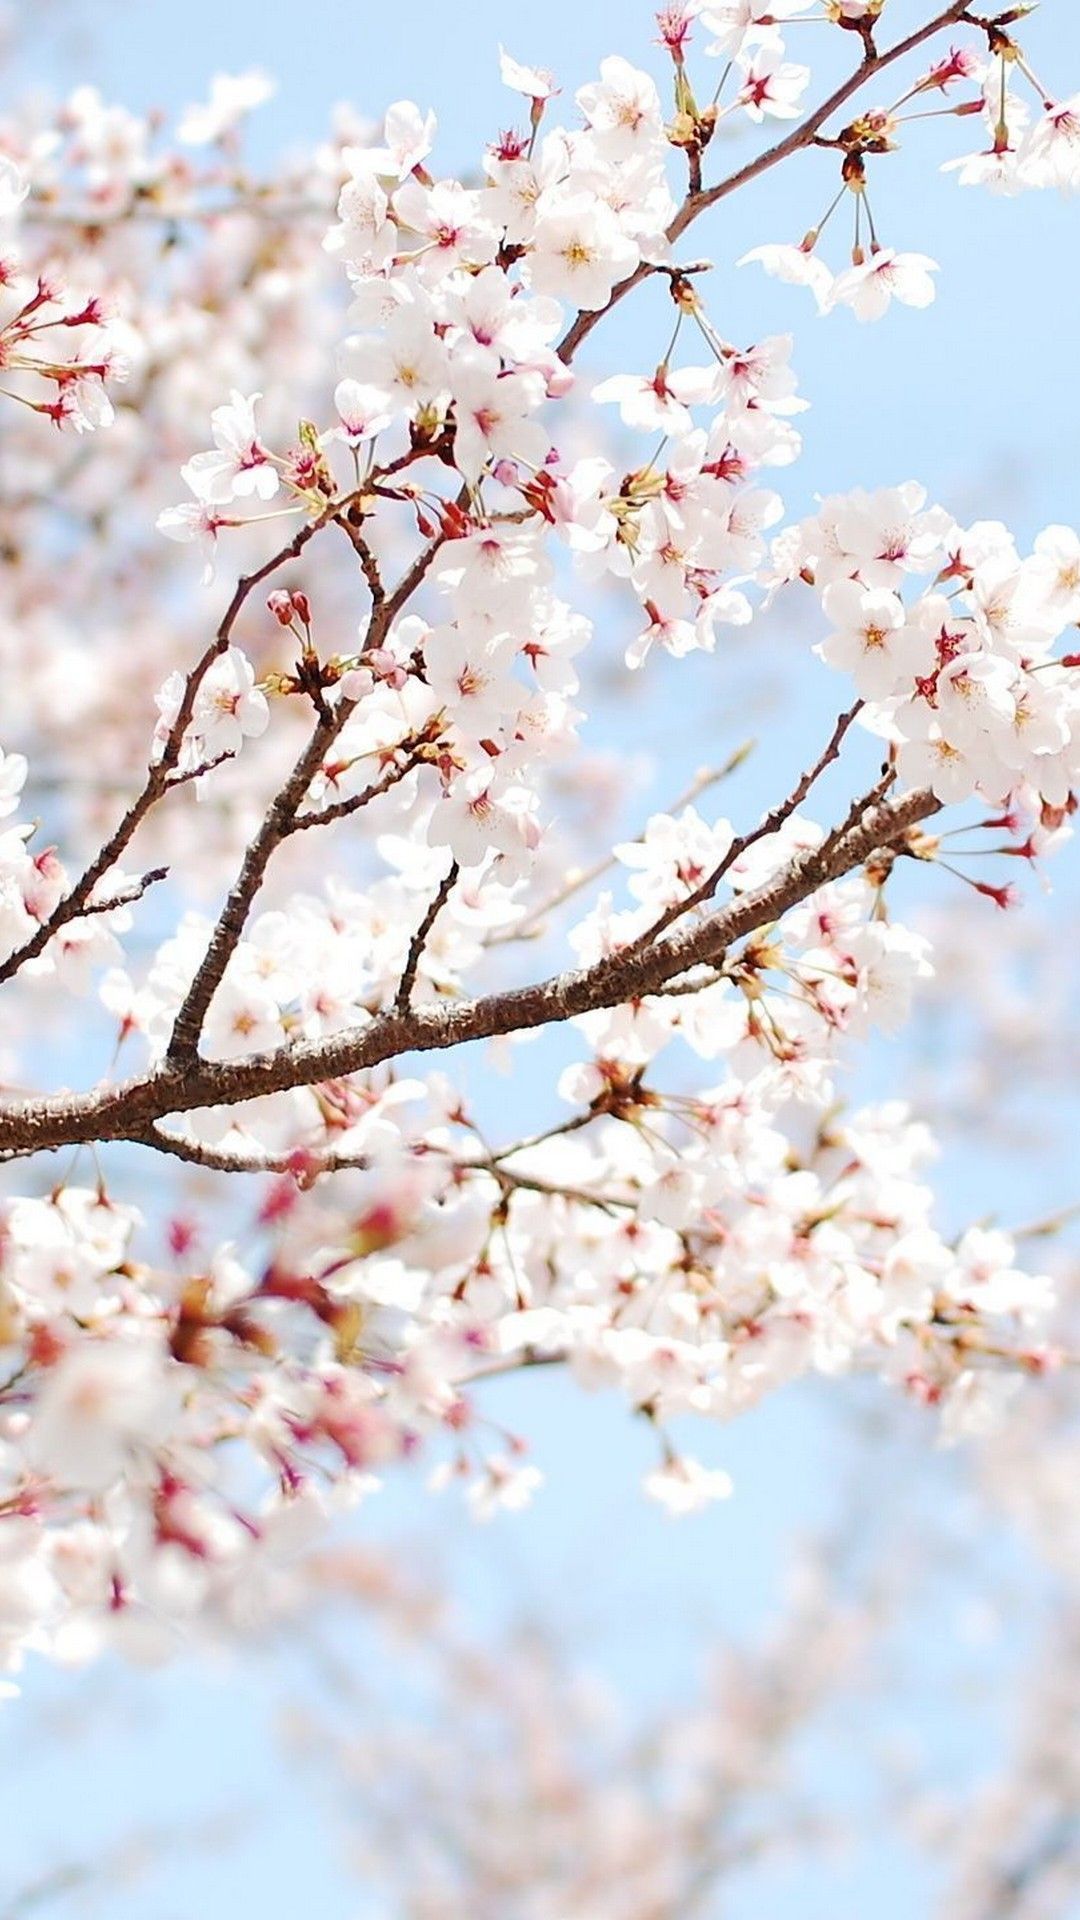 Spring iPhone Wallpaper. Cherry blossom wallpaper